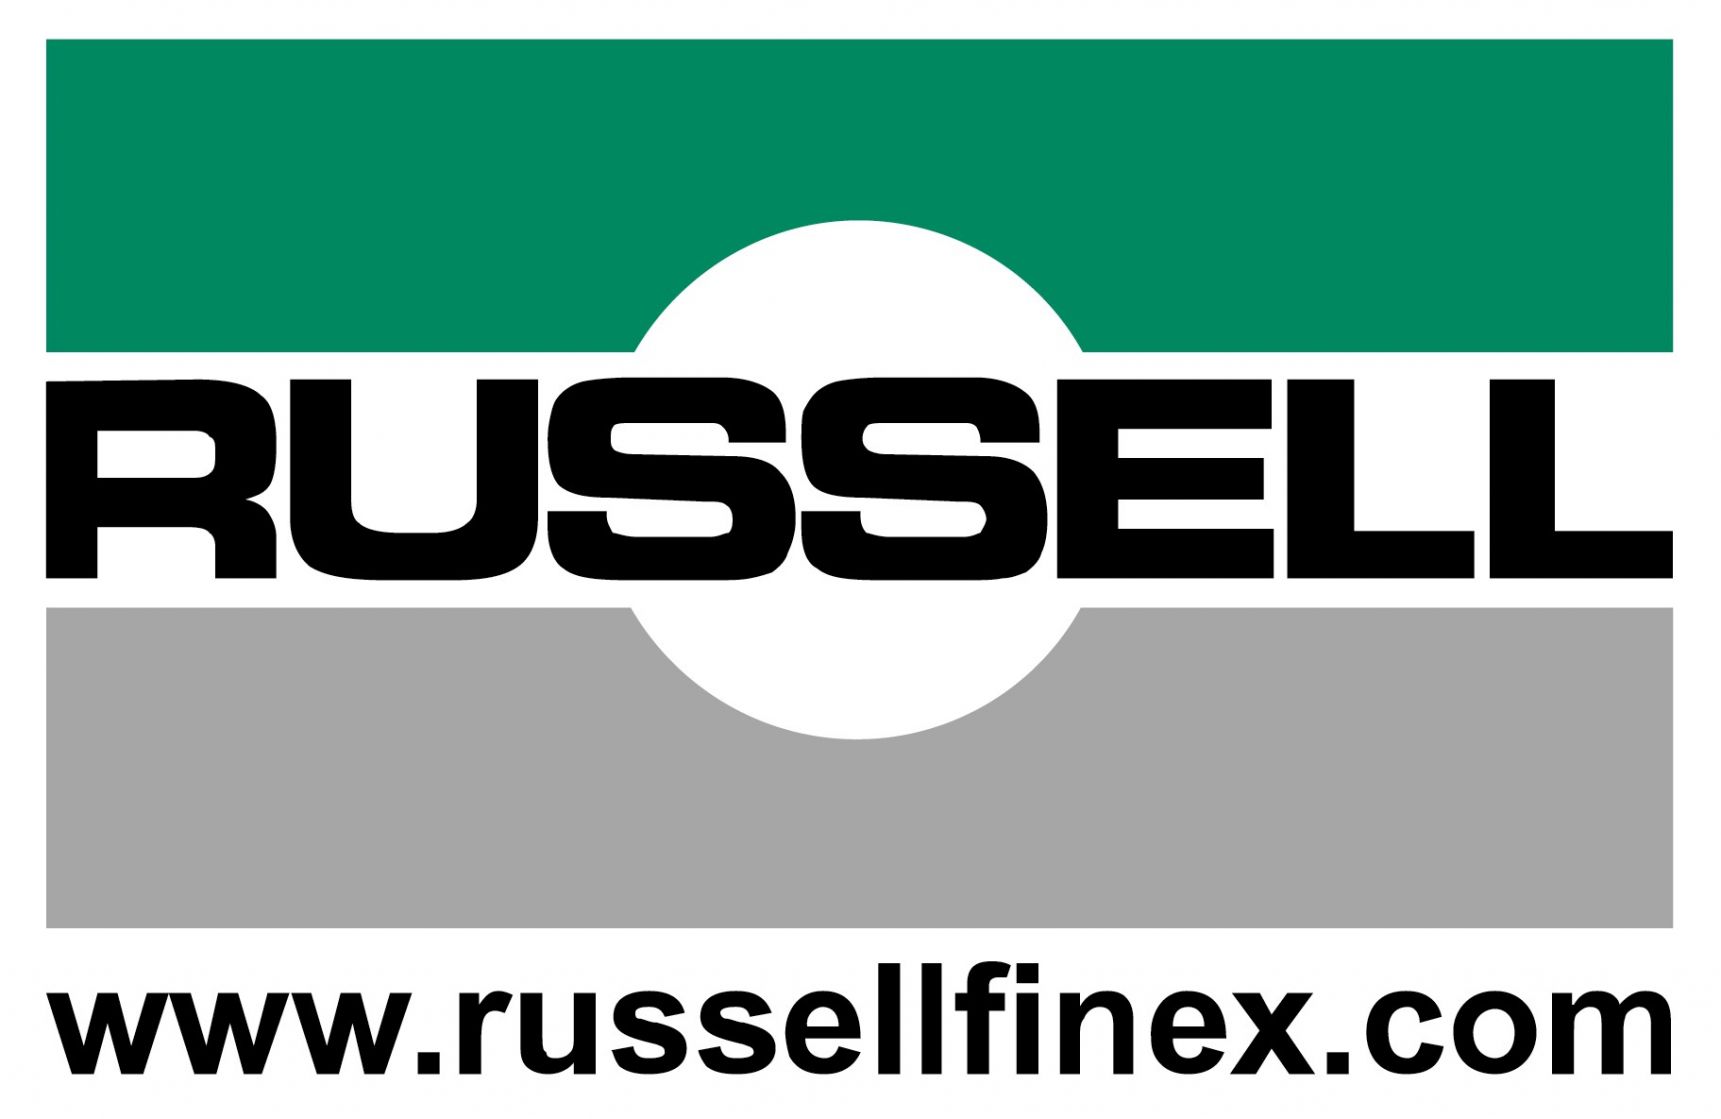 Russell Finex Logo